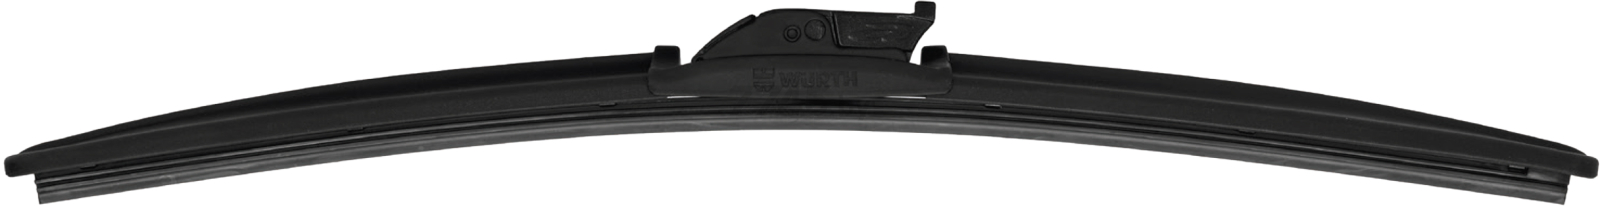 Щетка стеклоочистителя WURTH Flatblade 600 мм (5848033600)